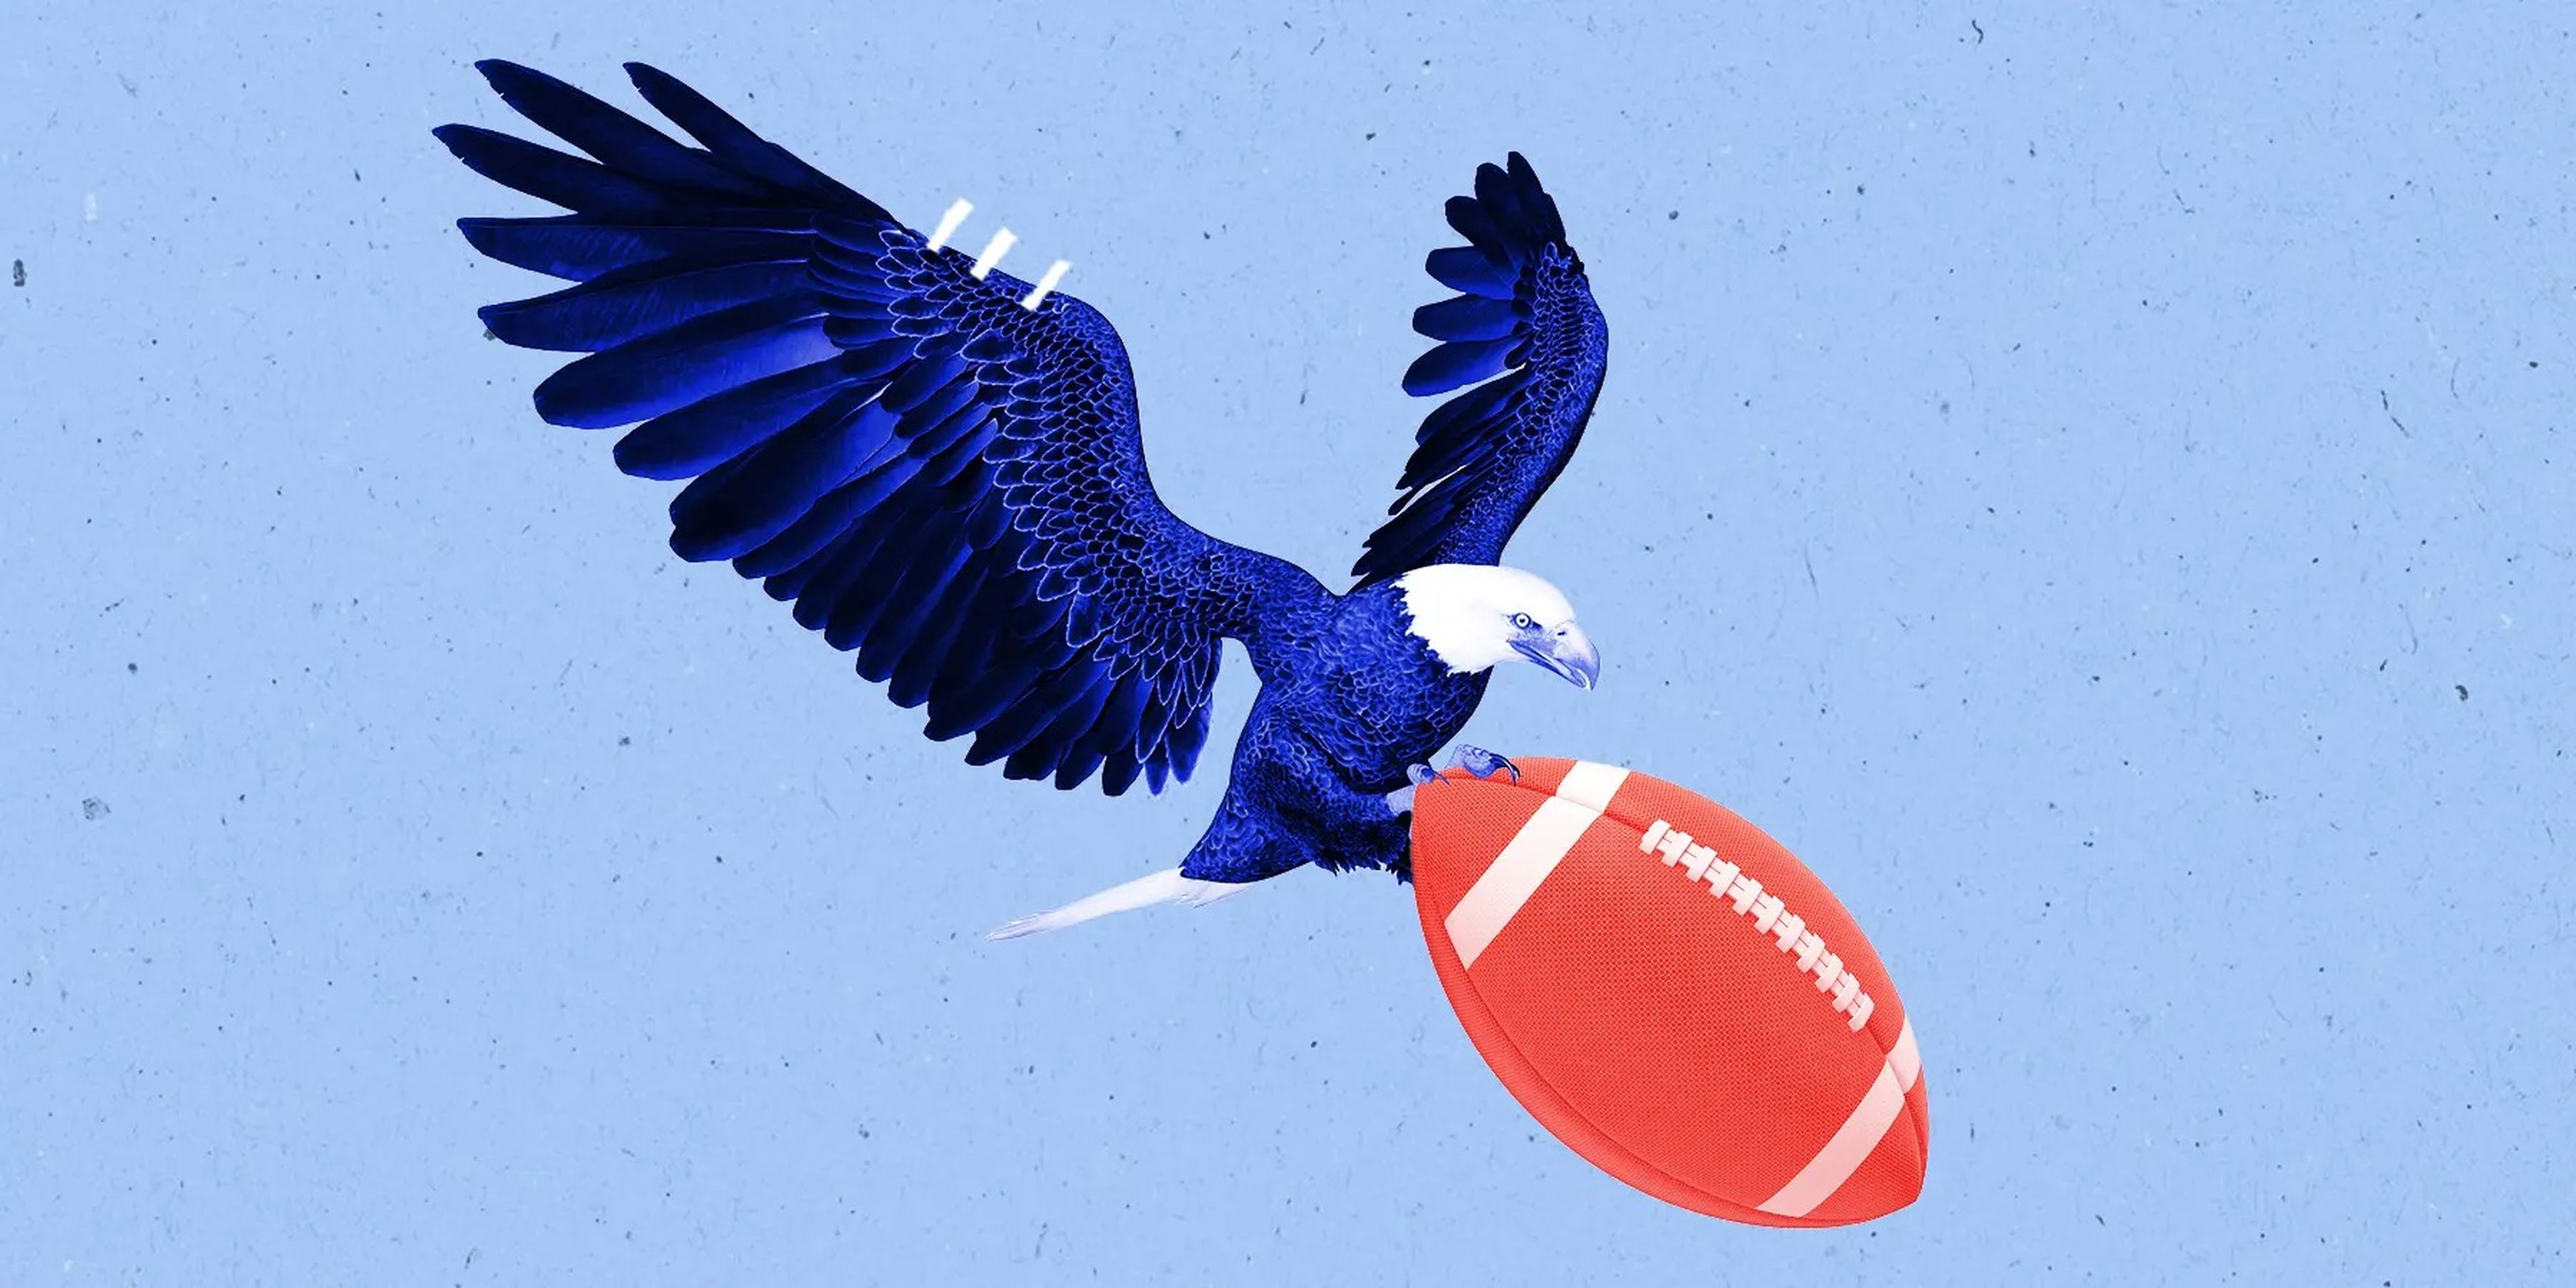 A bald eagle holding a football